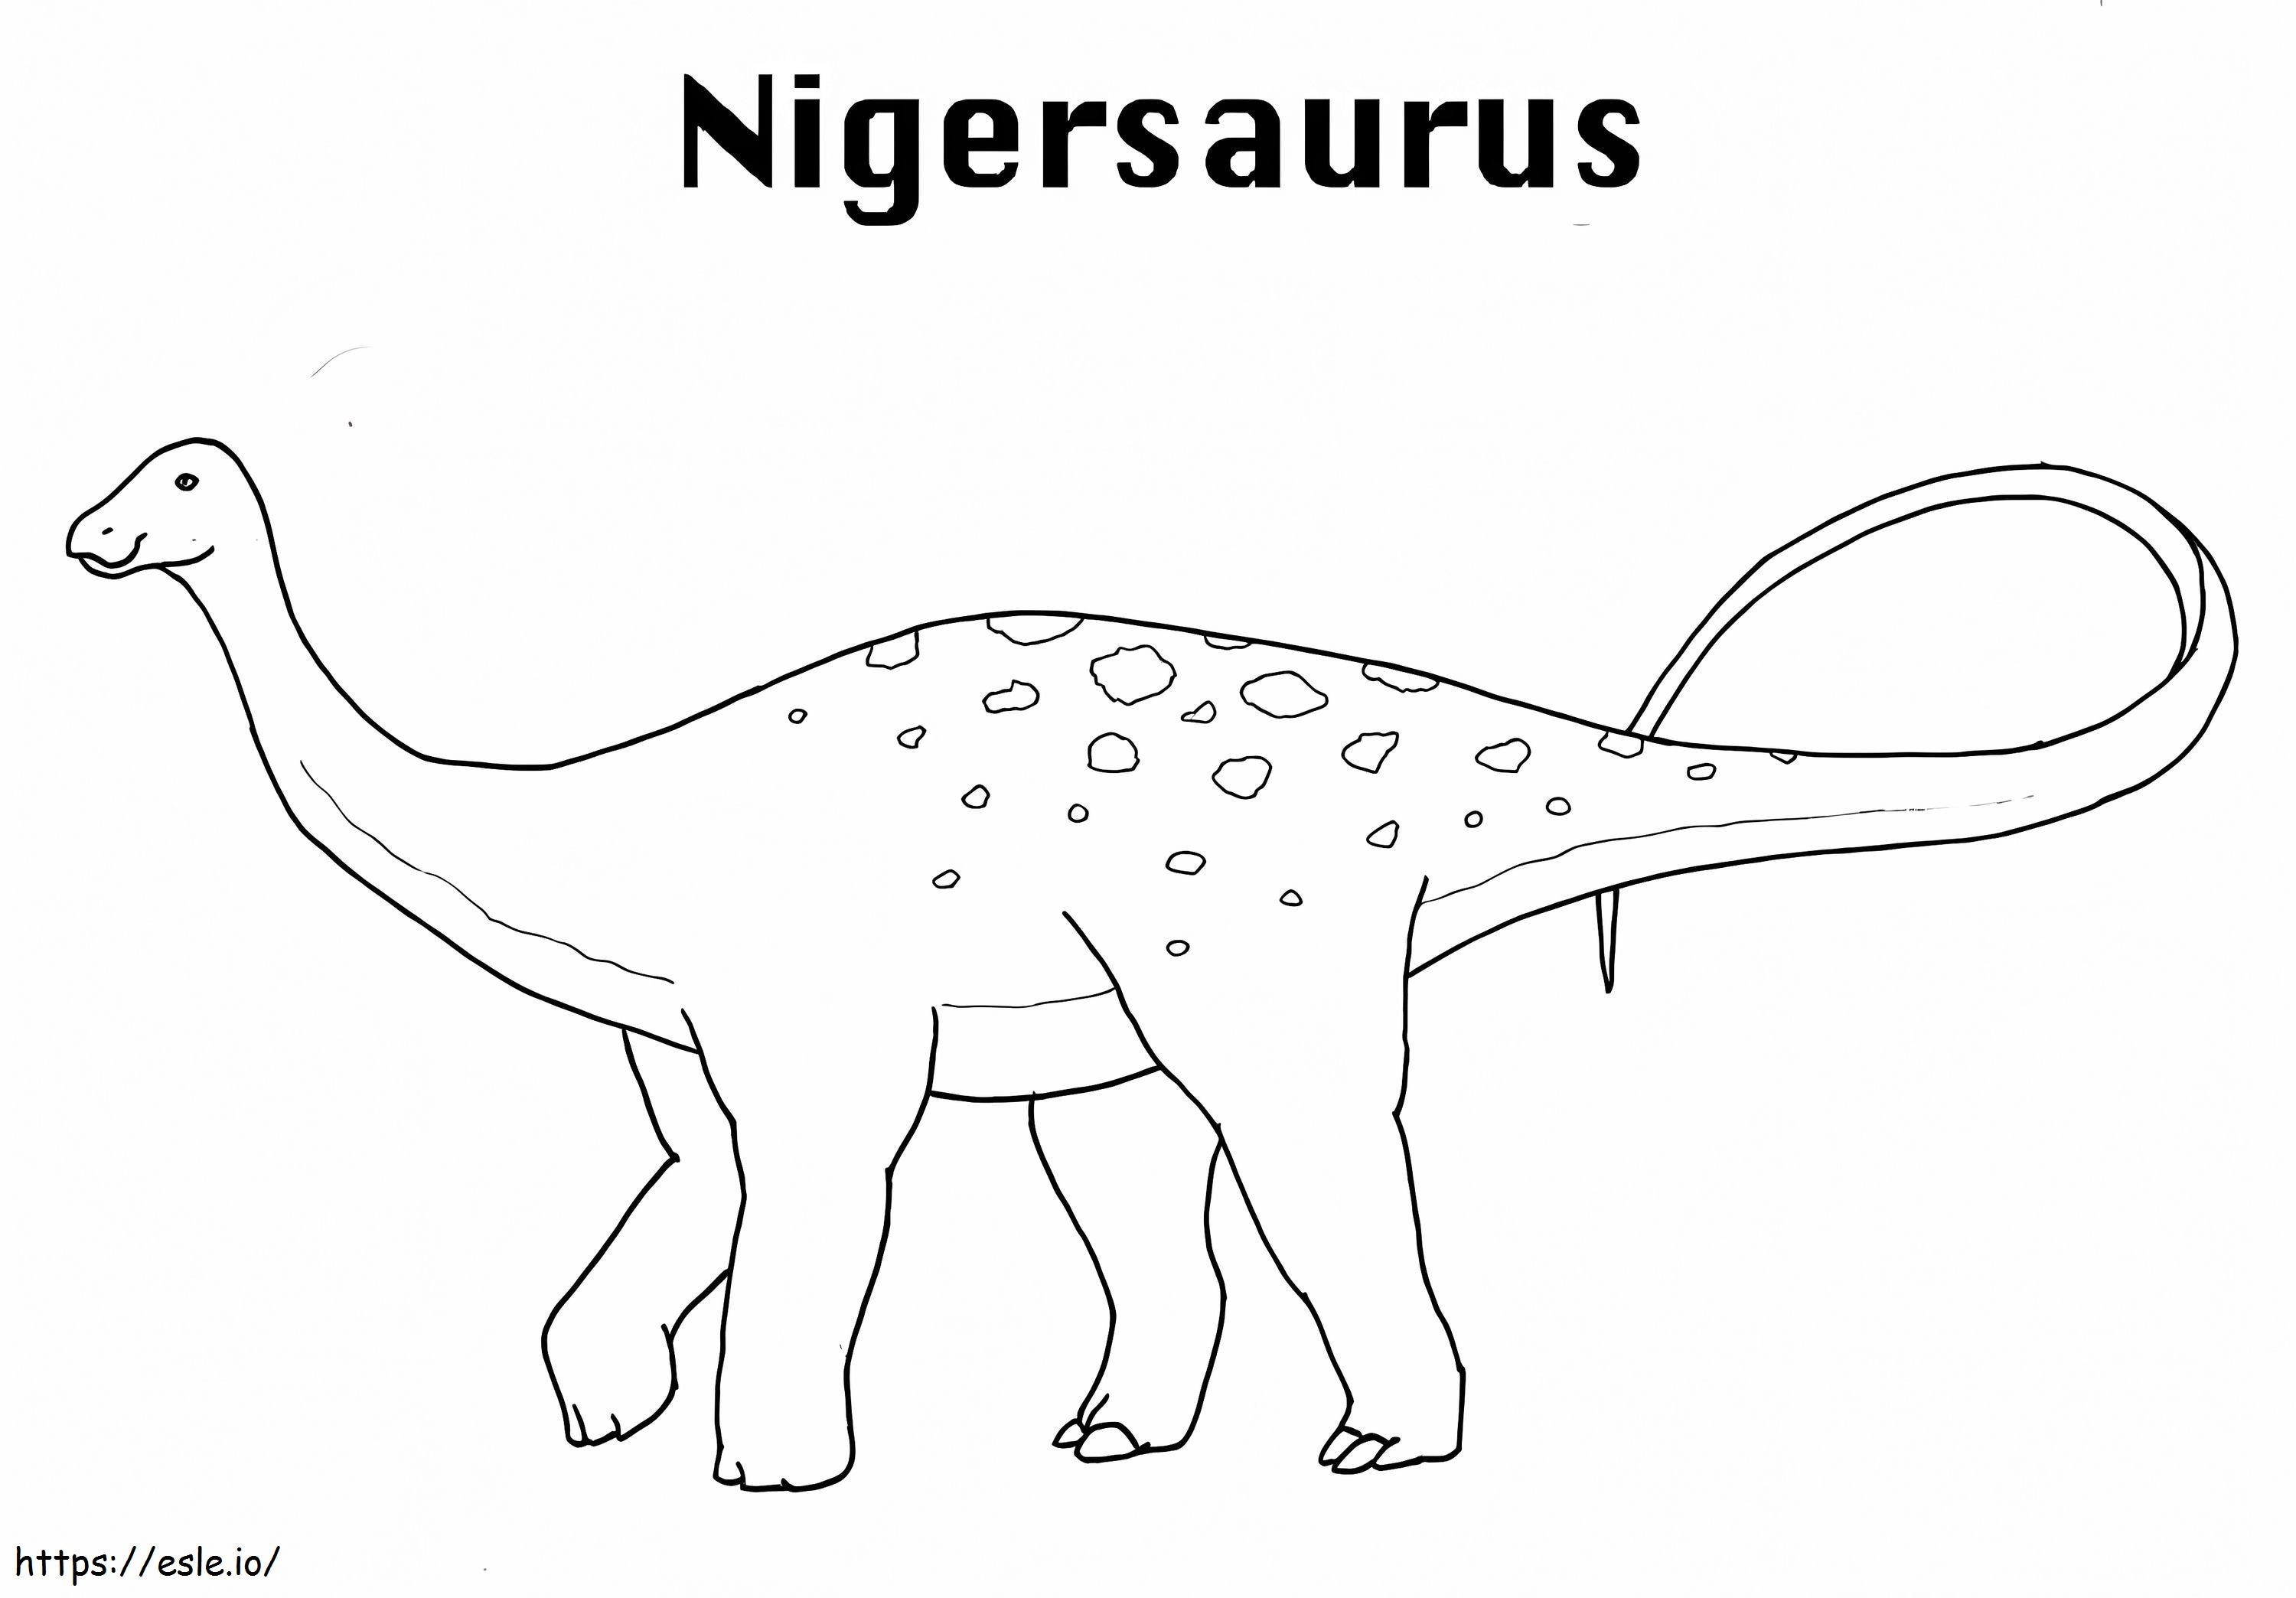 Nigersaurus Dinosaur coloring page